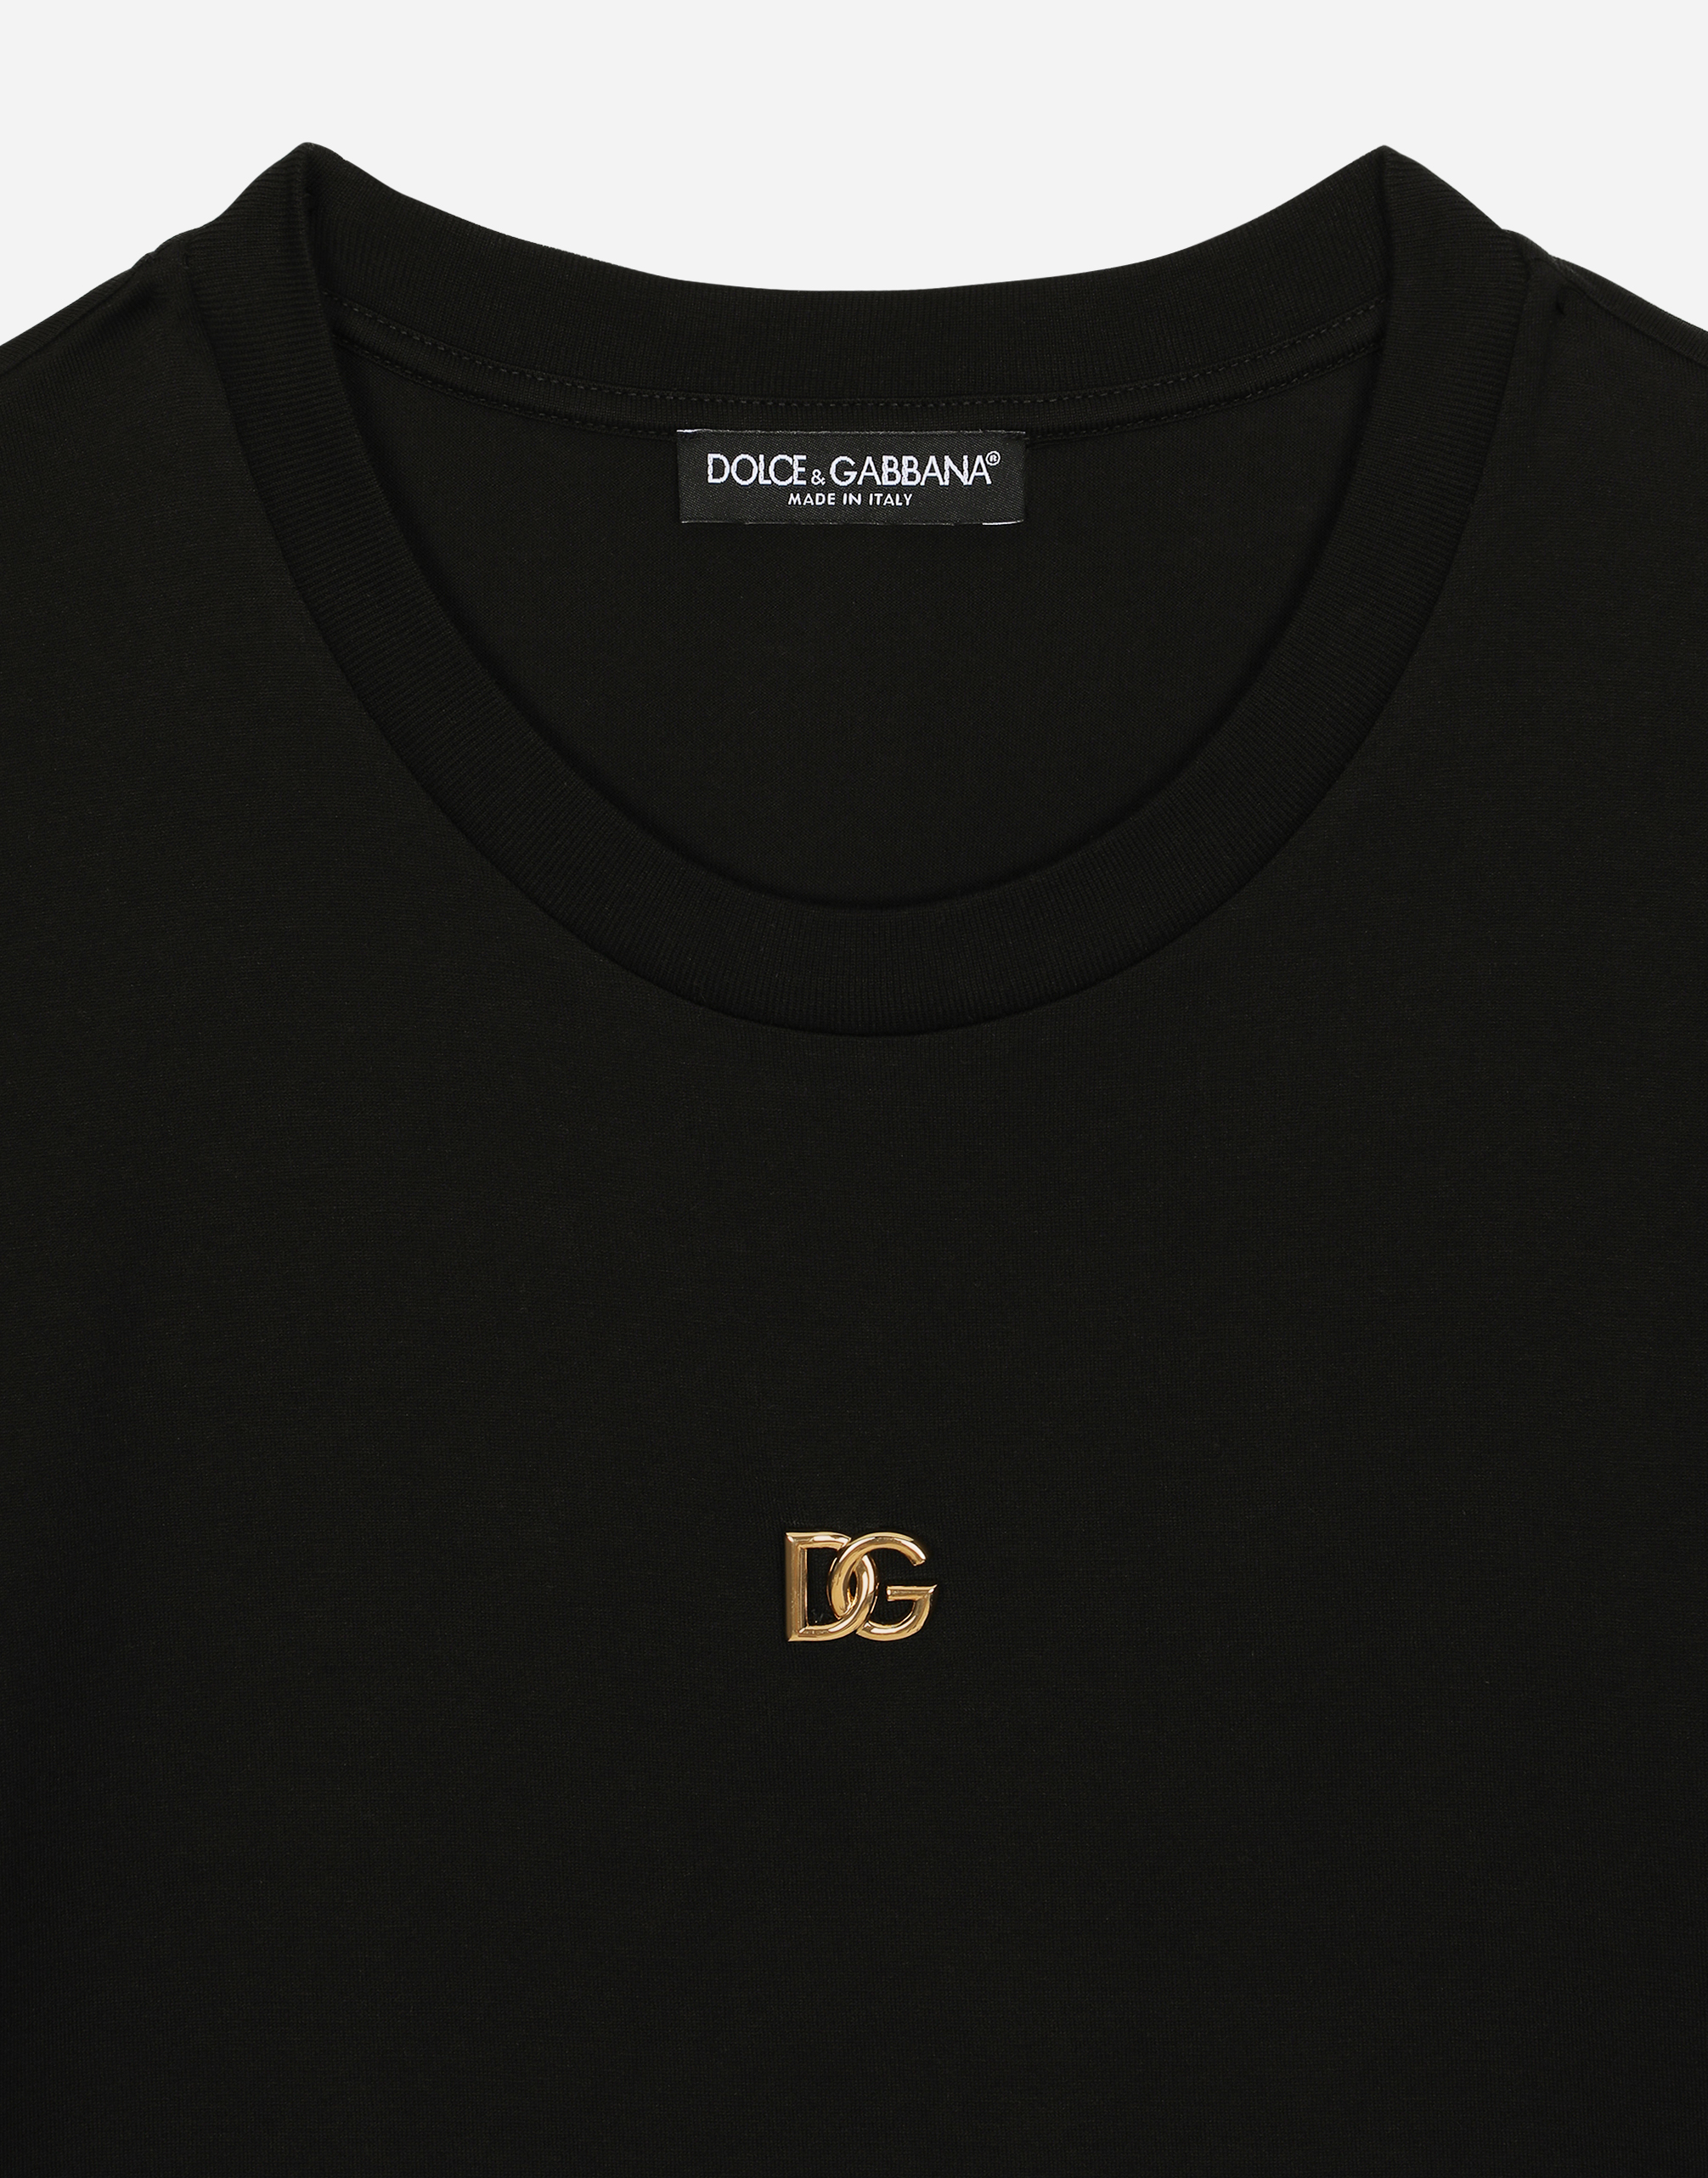 Cotton T-shirt with DG logo